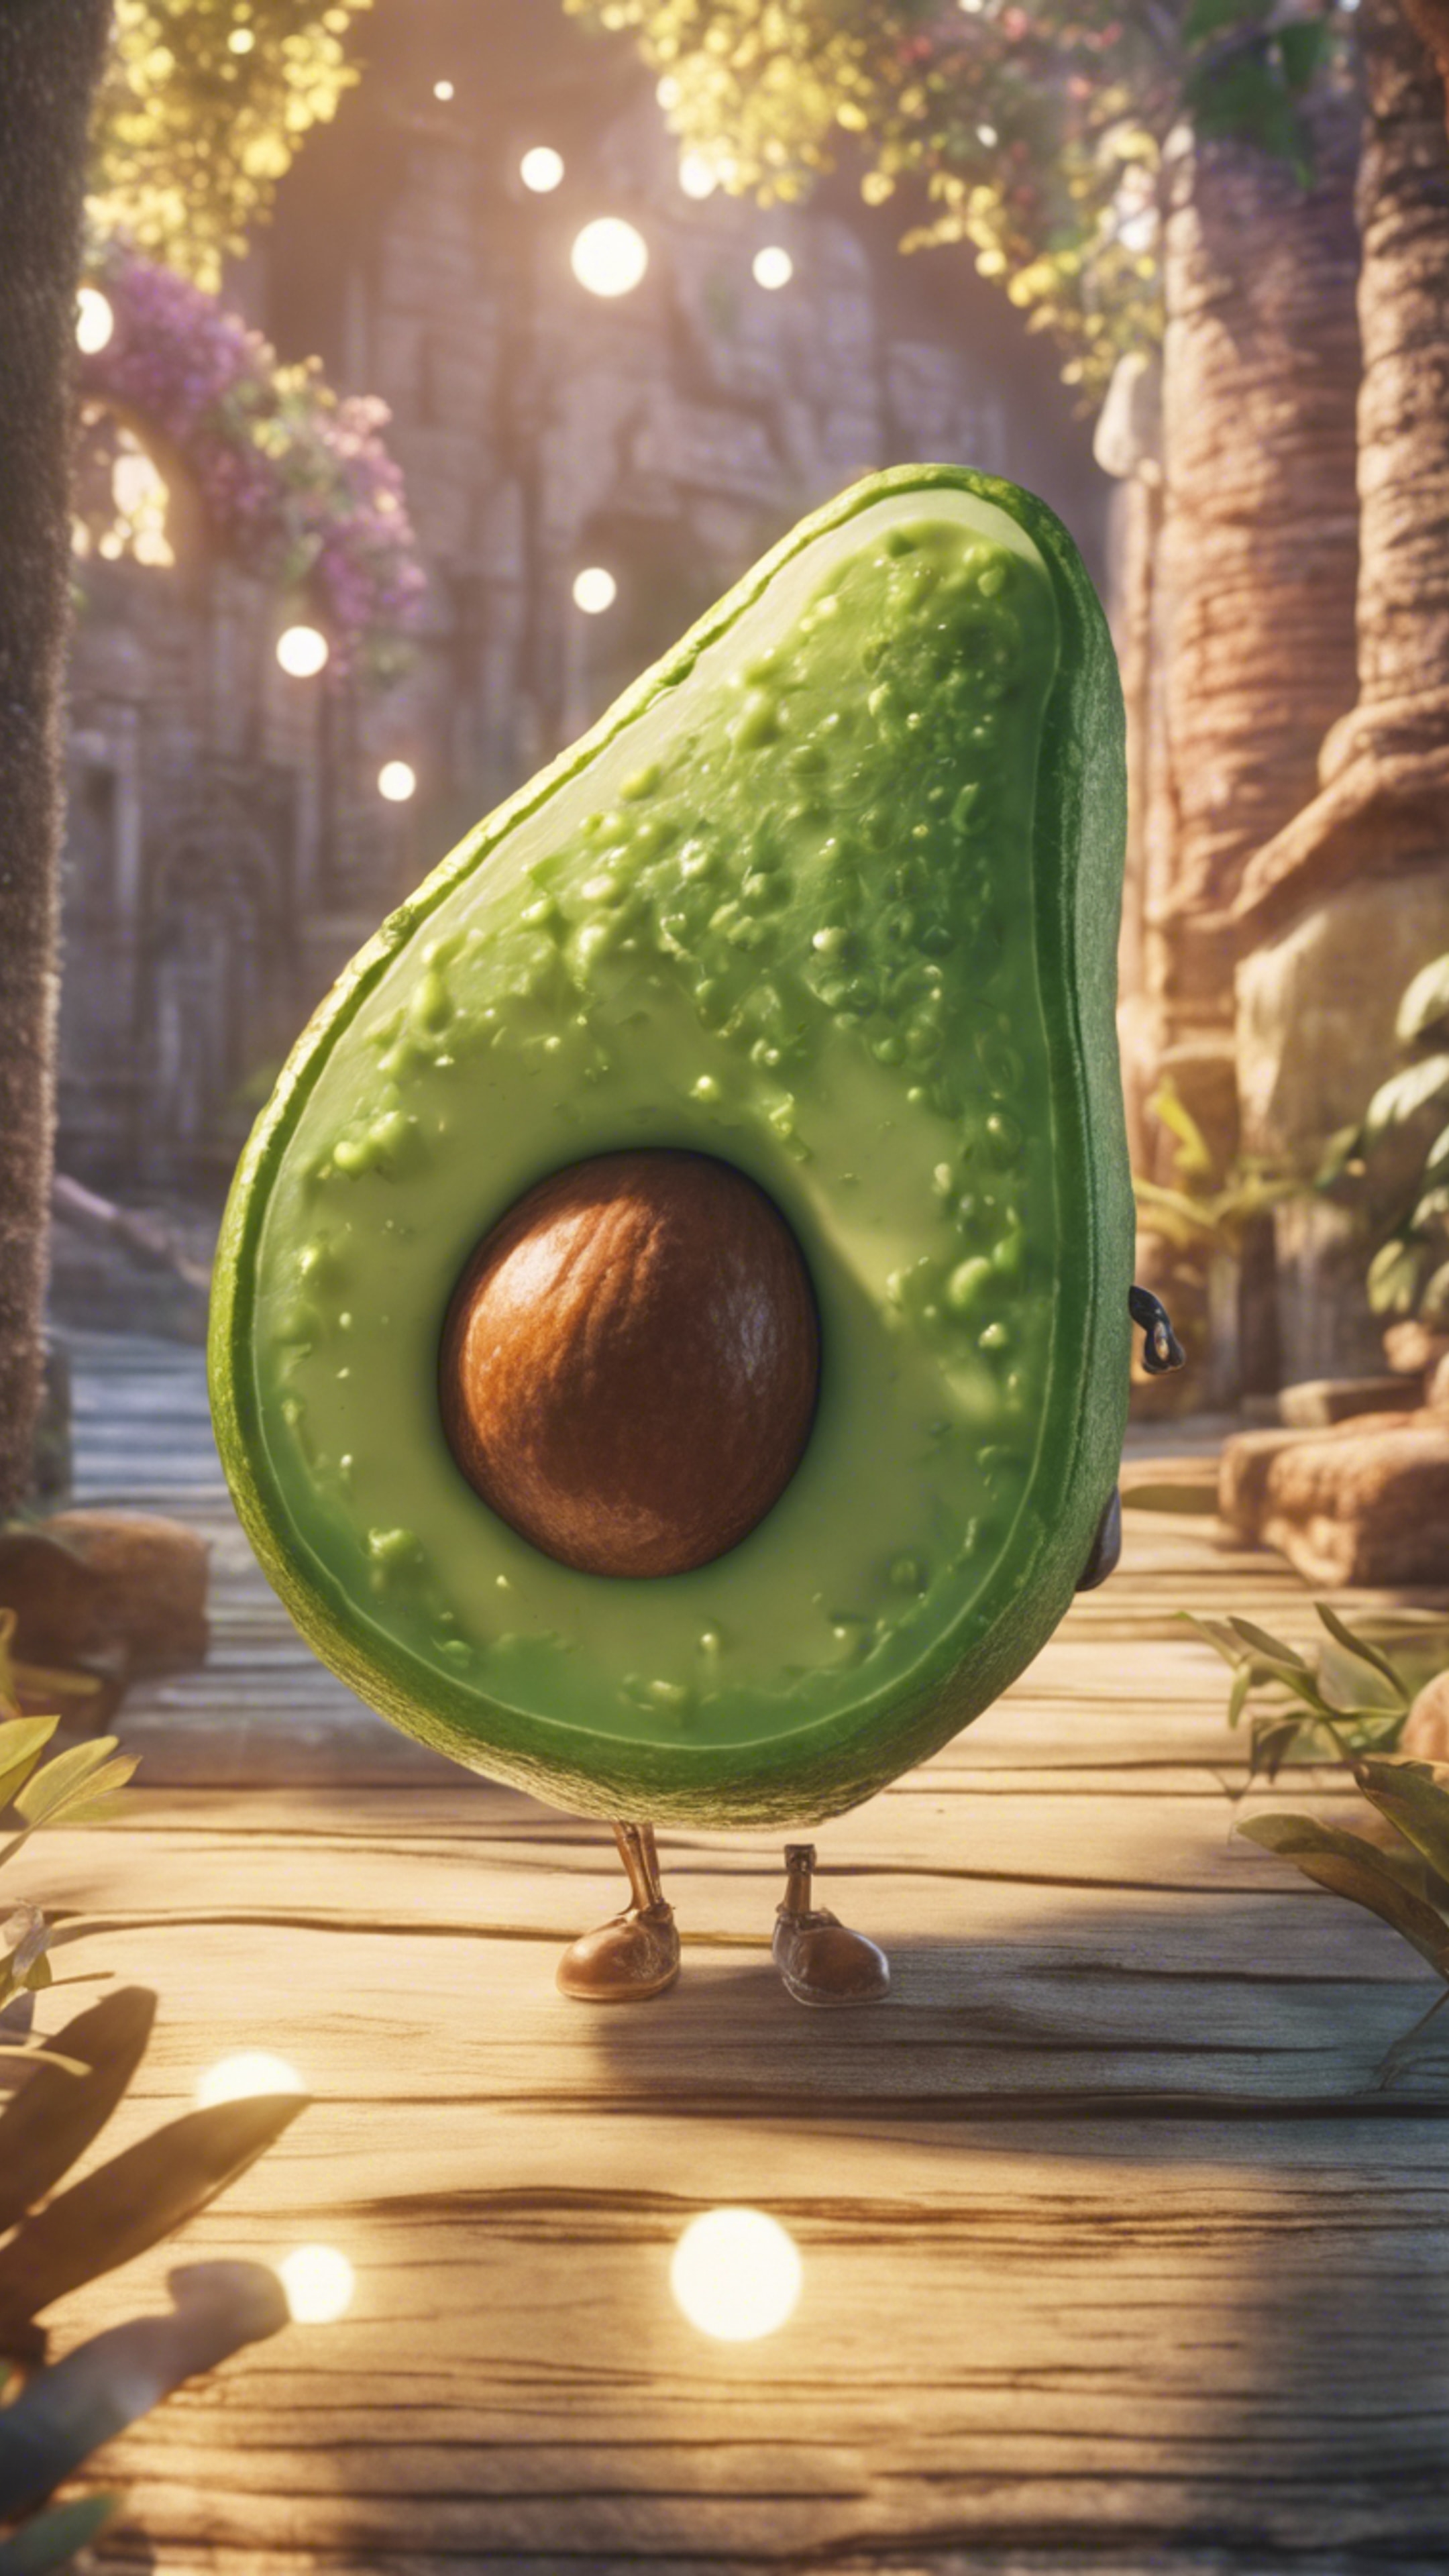 A manga-style scene of an avocado on a magical journey วอลล์เปเปอร์[452ab1c8ad254f0b95e7]